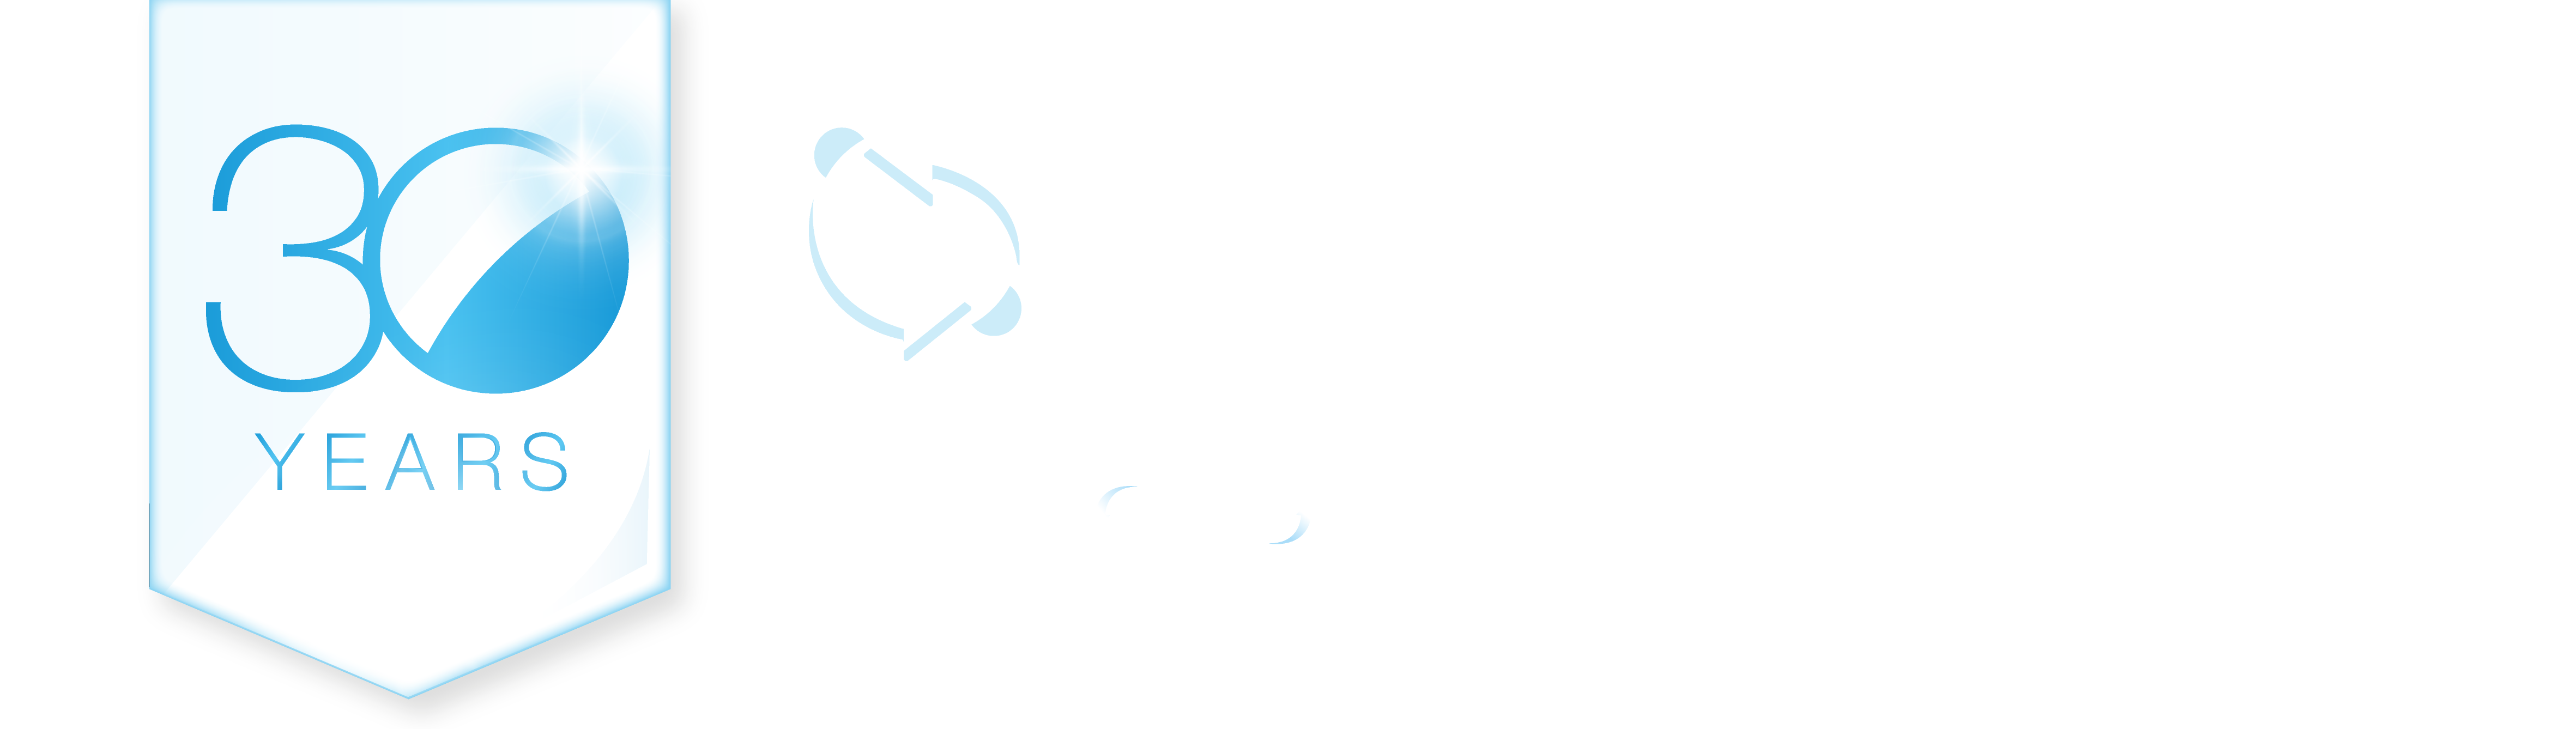 CPhI Worldwide